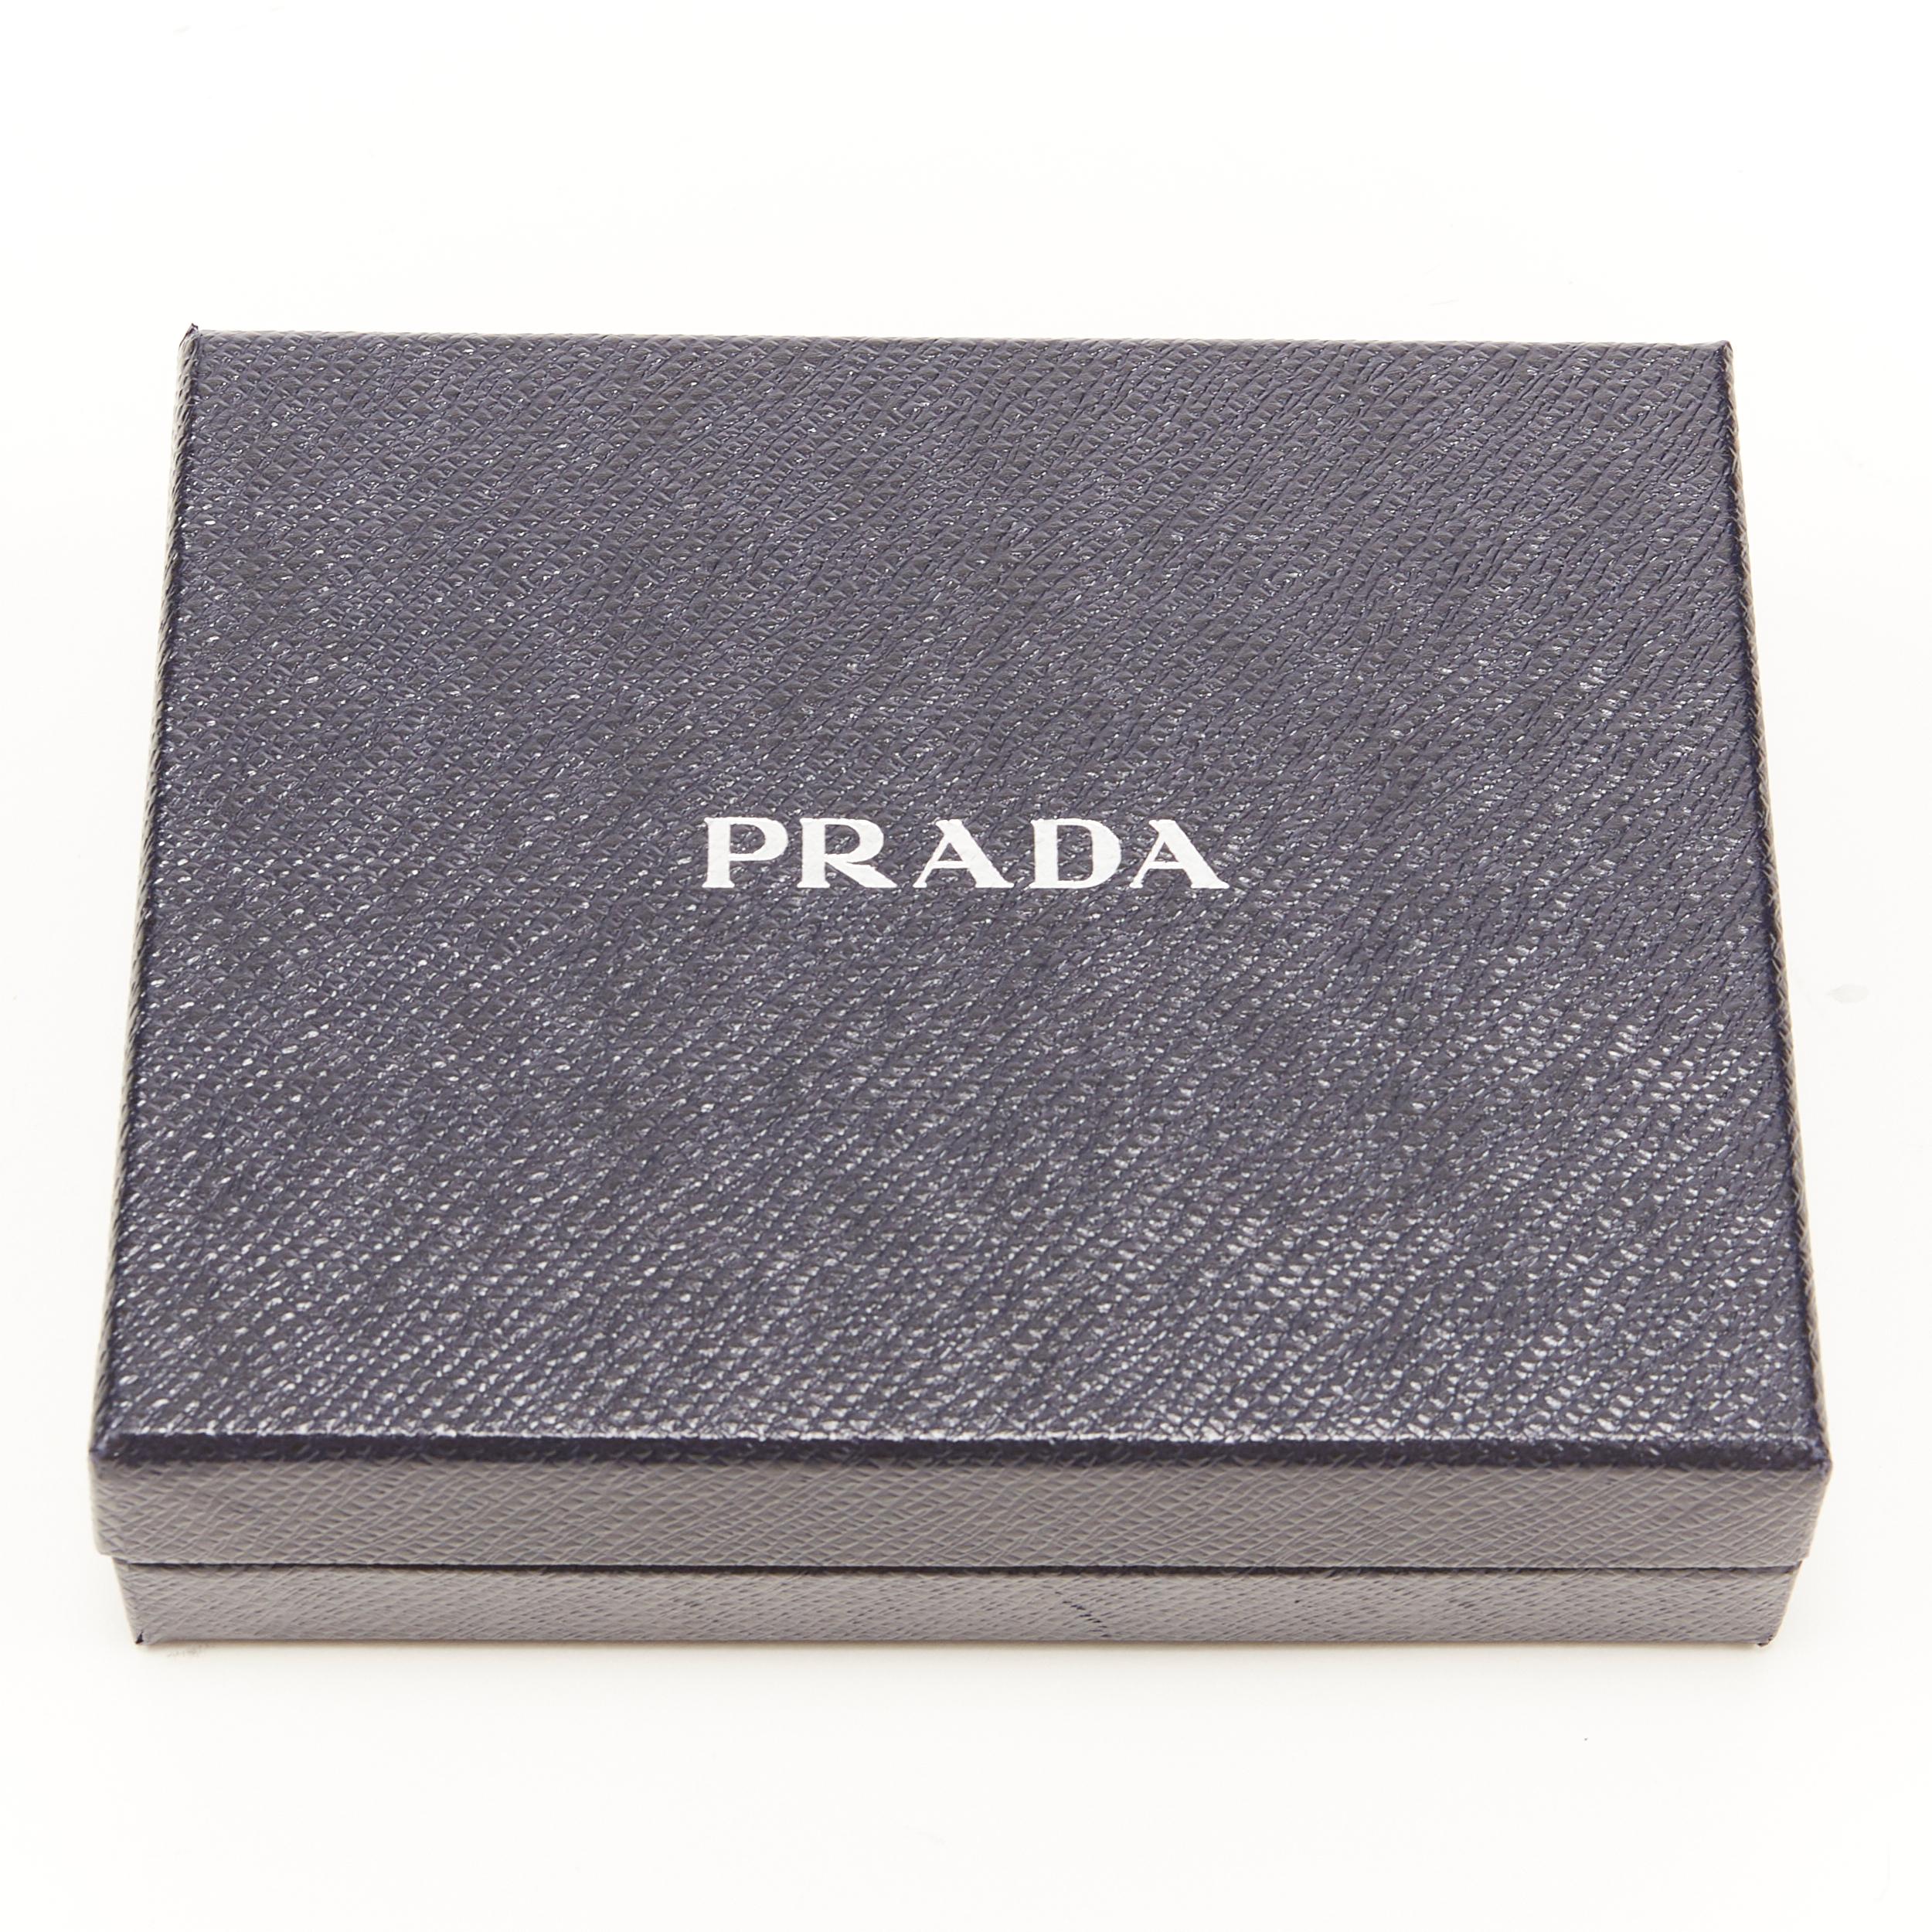 Women's new PRADA metallic gold saffiano leather triangle logo plate crossbody pouch bag